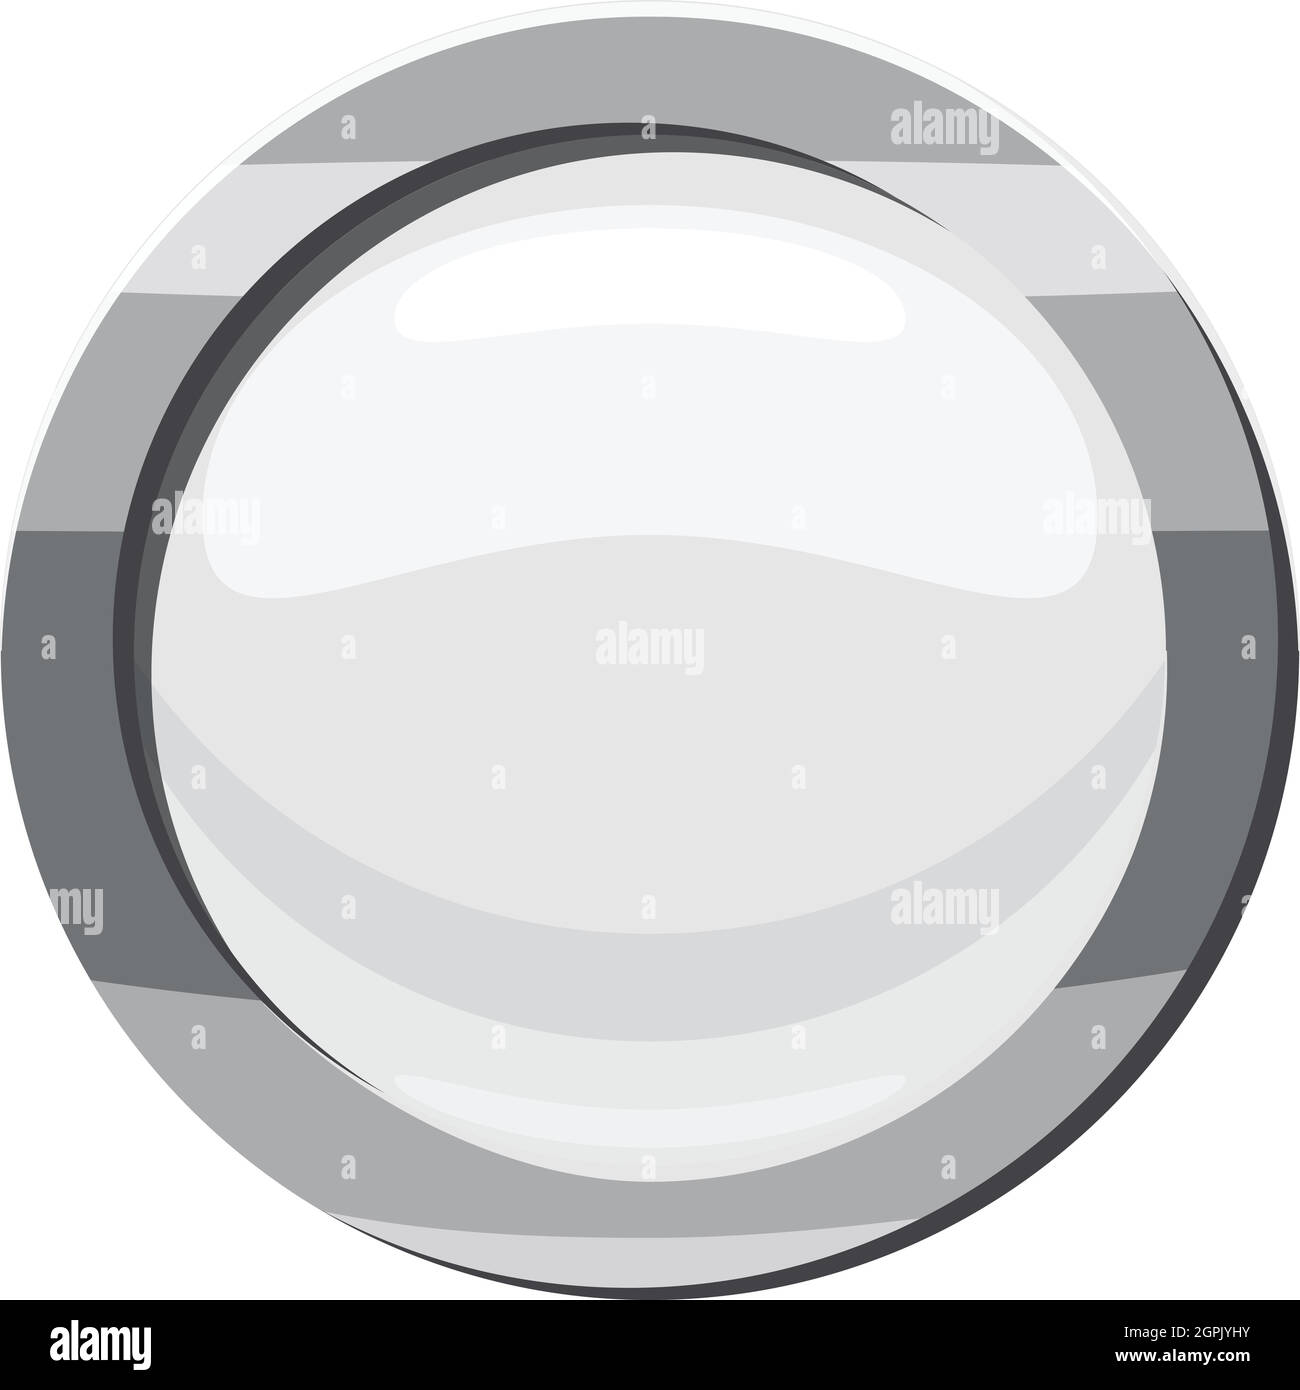 Button click icon, cartoon style Stock Vector Image & Art - Alamy